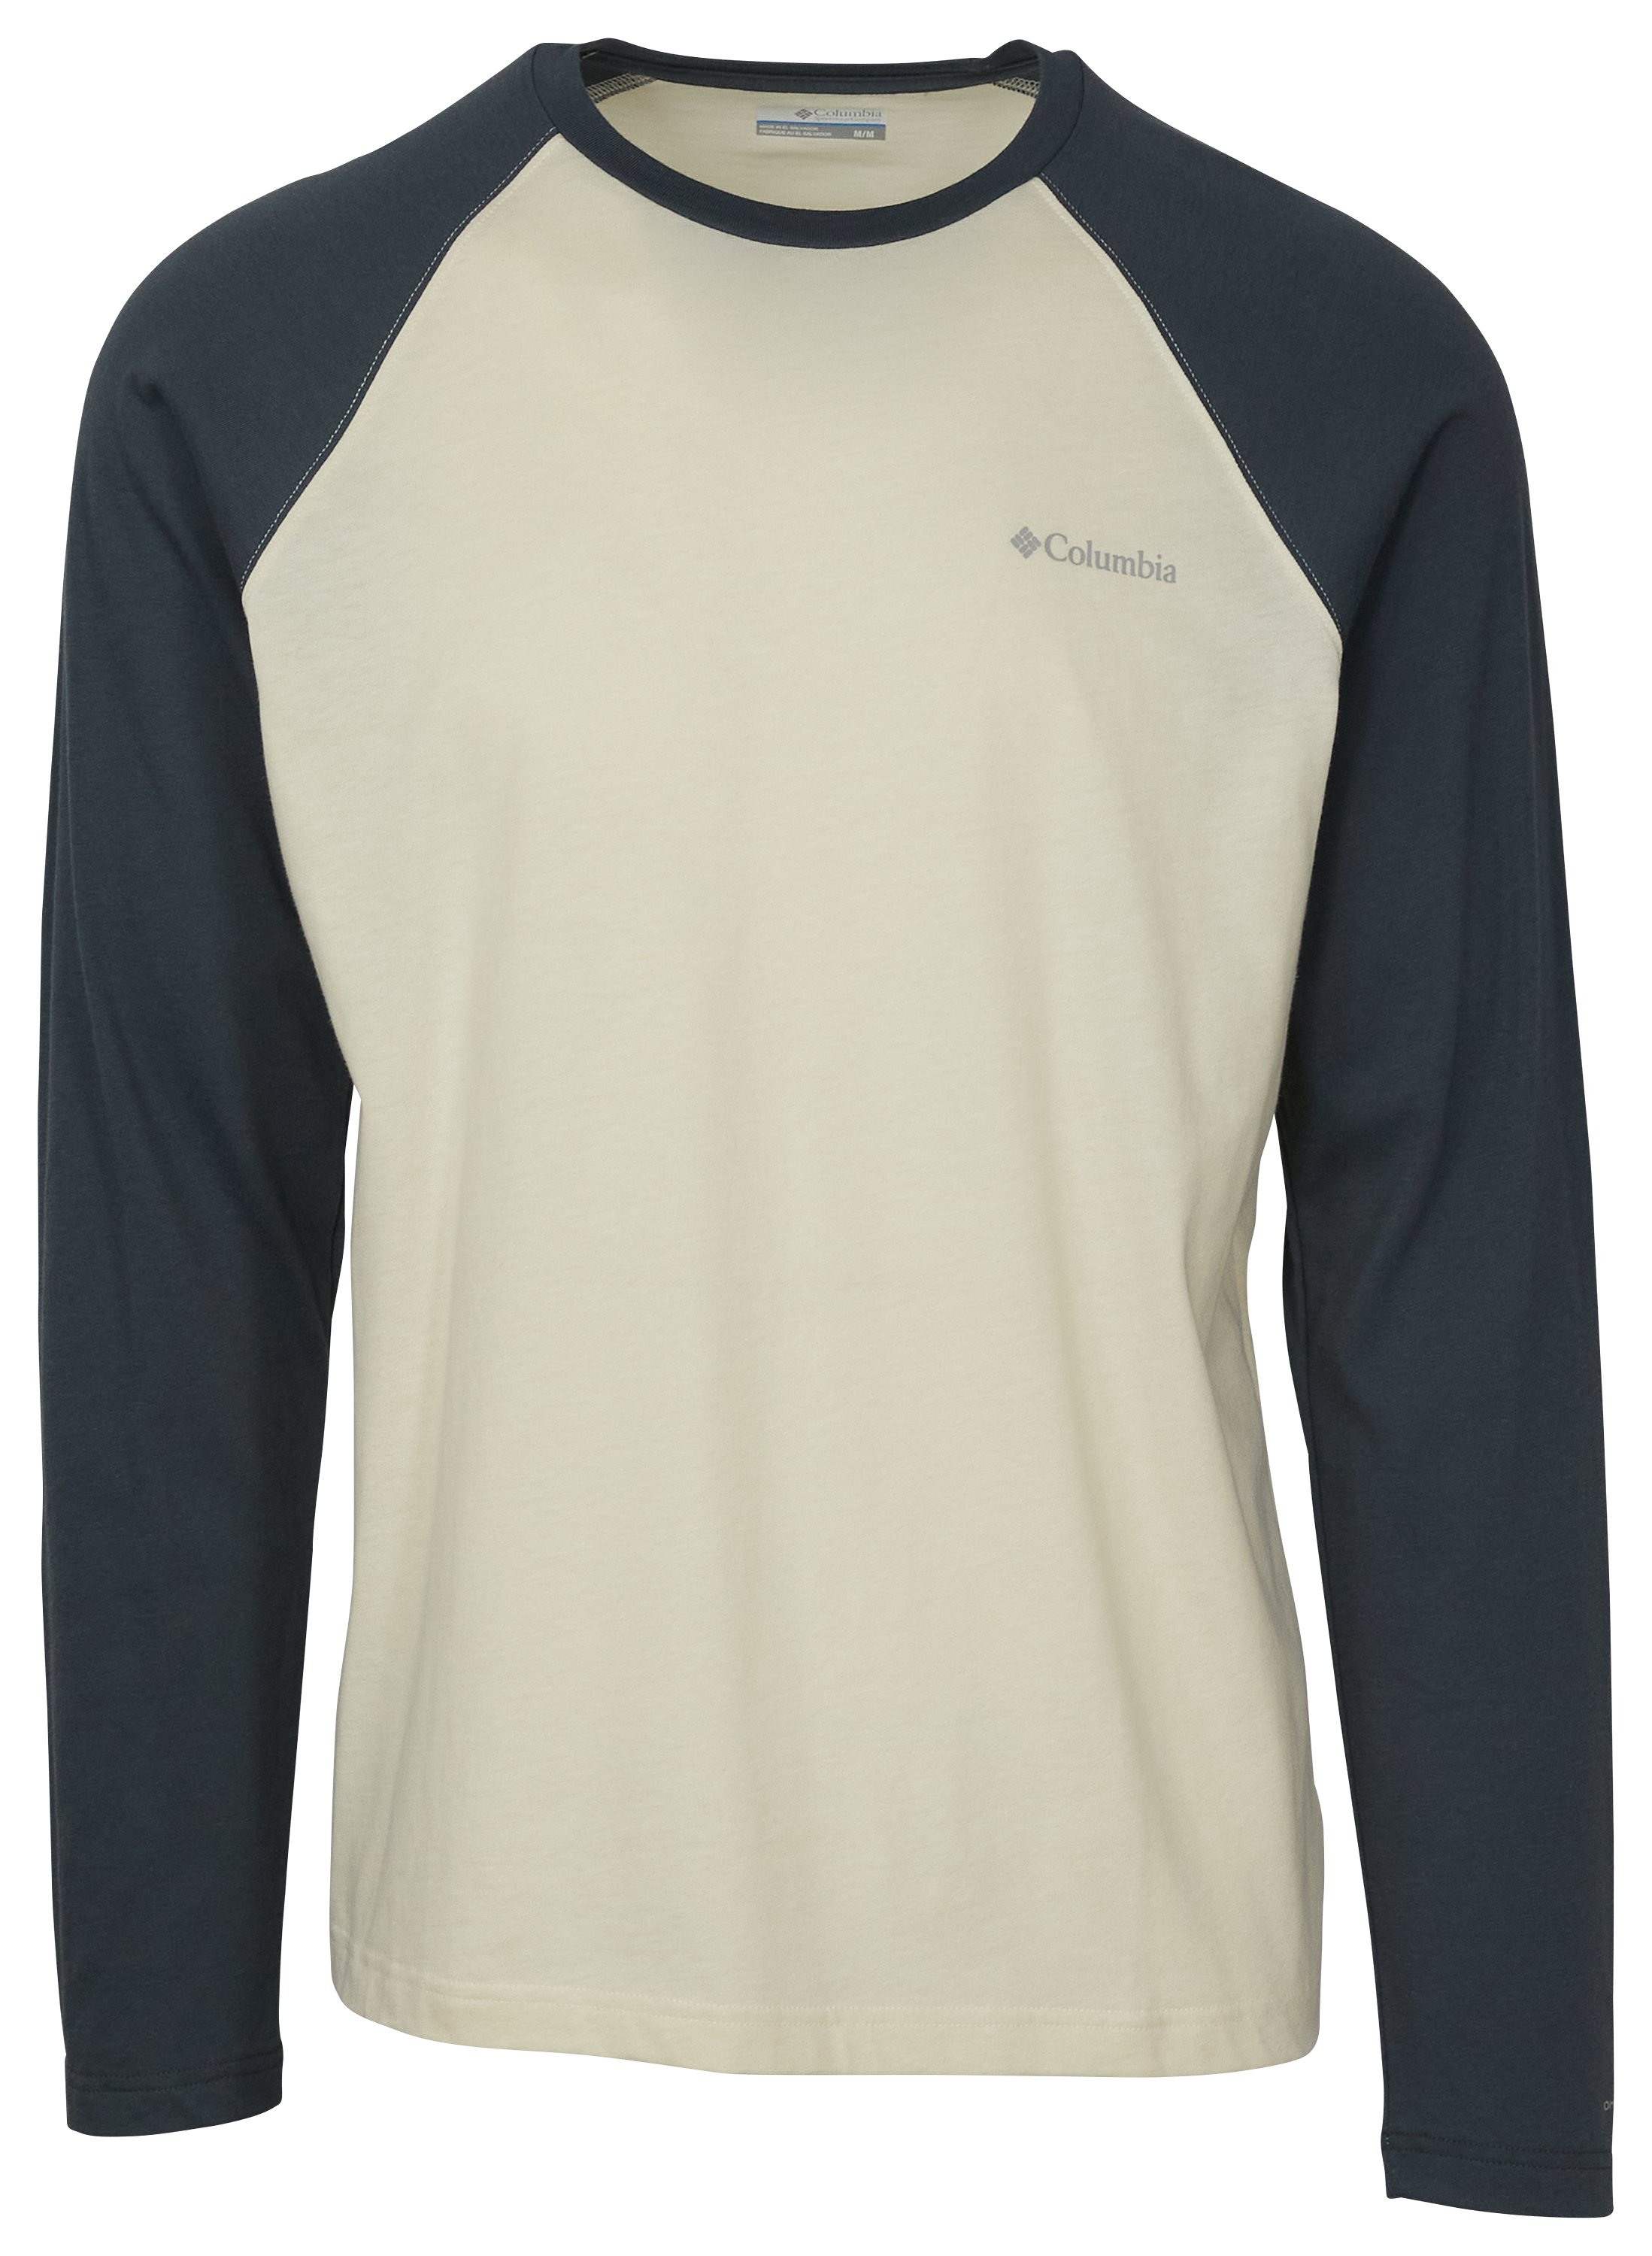 Columbia Thistletown Hills Raglan Long-Sleeve Shirt for Men